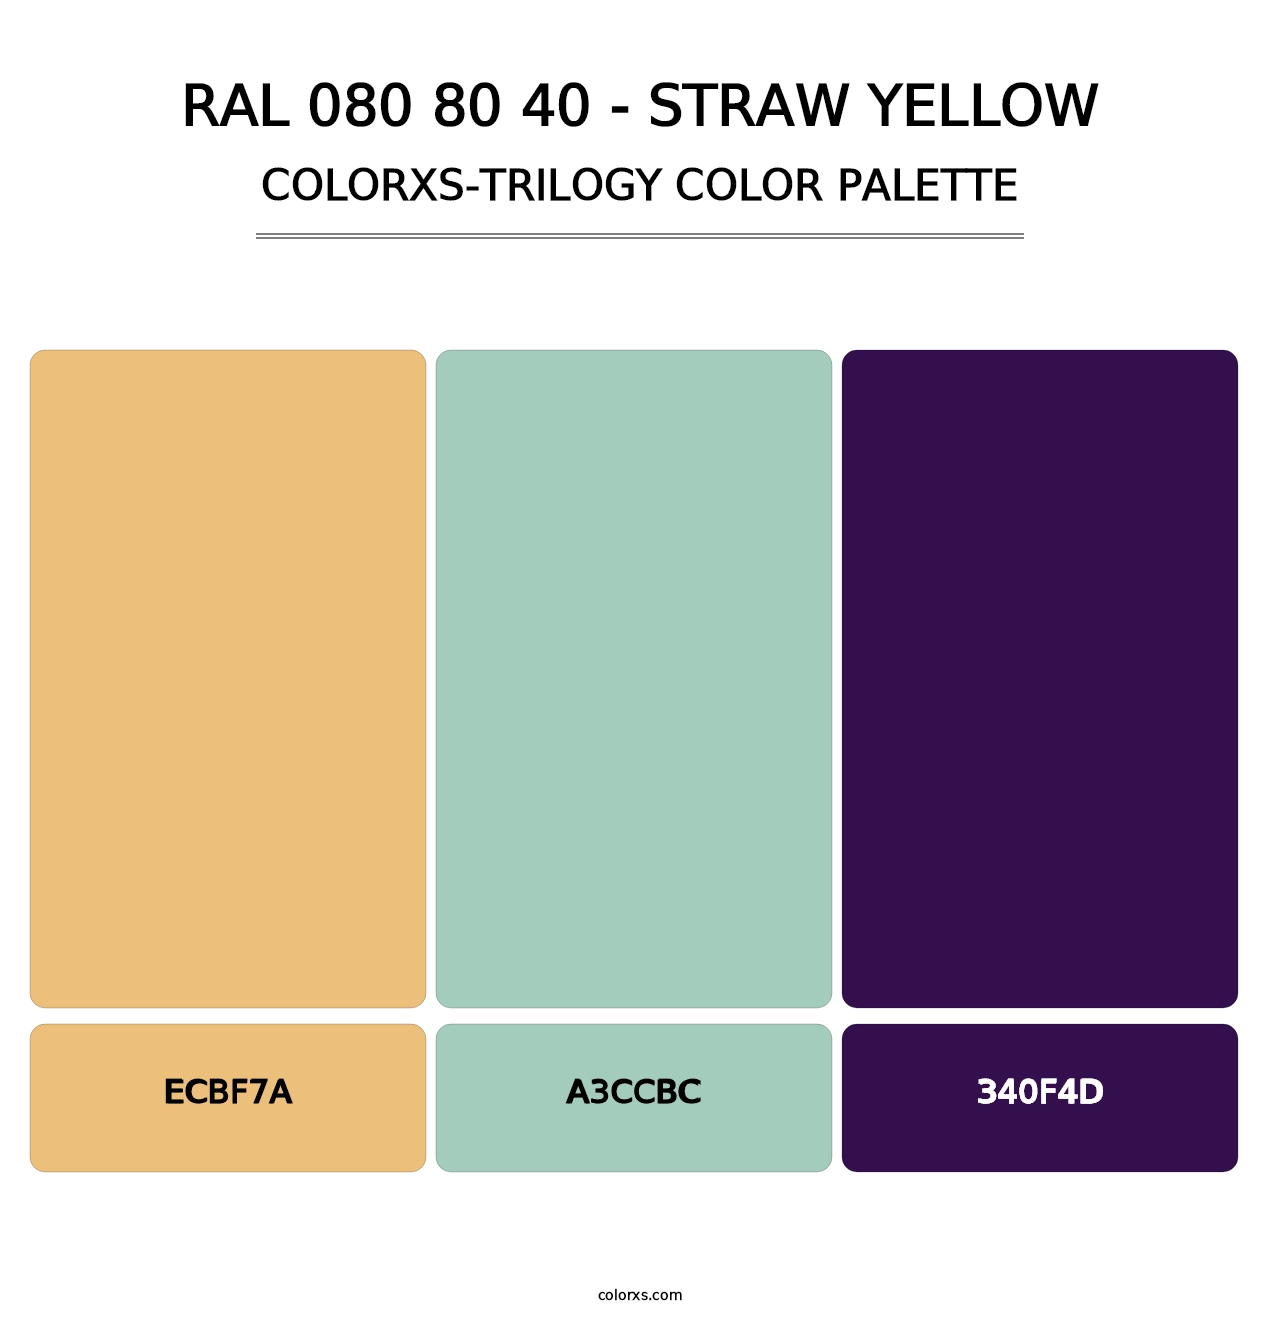 RAL 080 80 40 - Straw Yellow - Colorxs Trilogy Palette